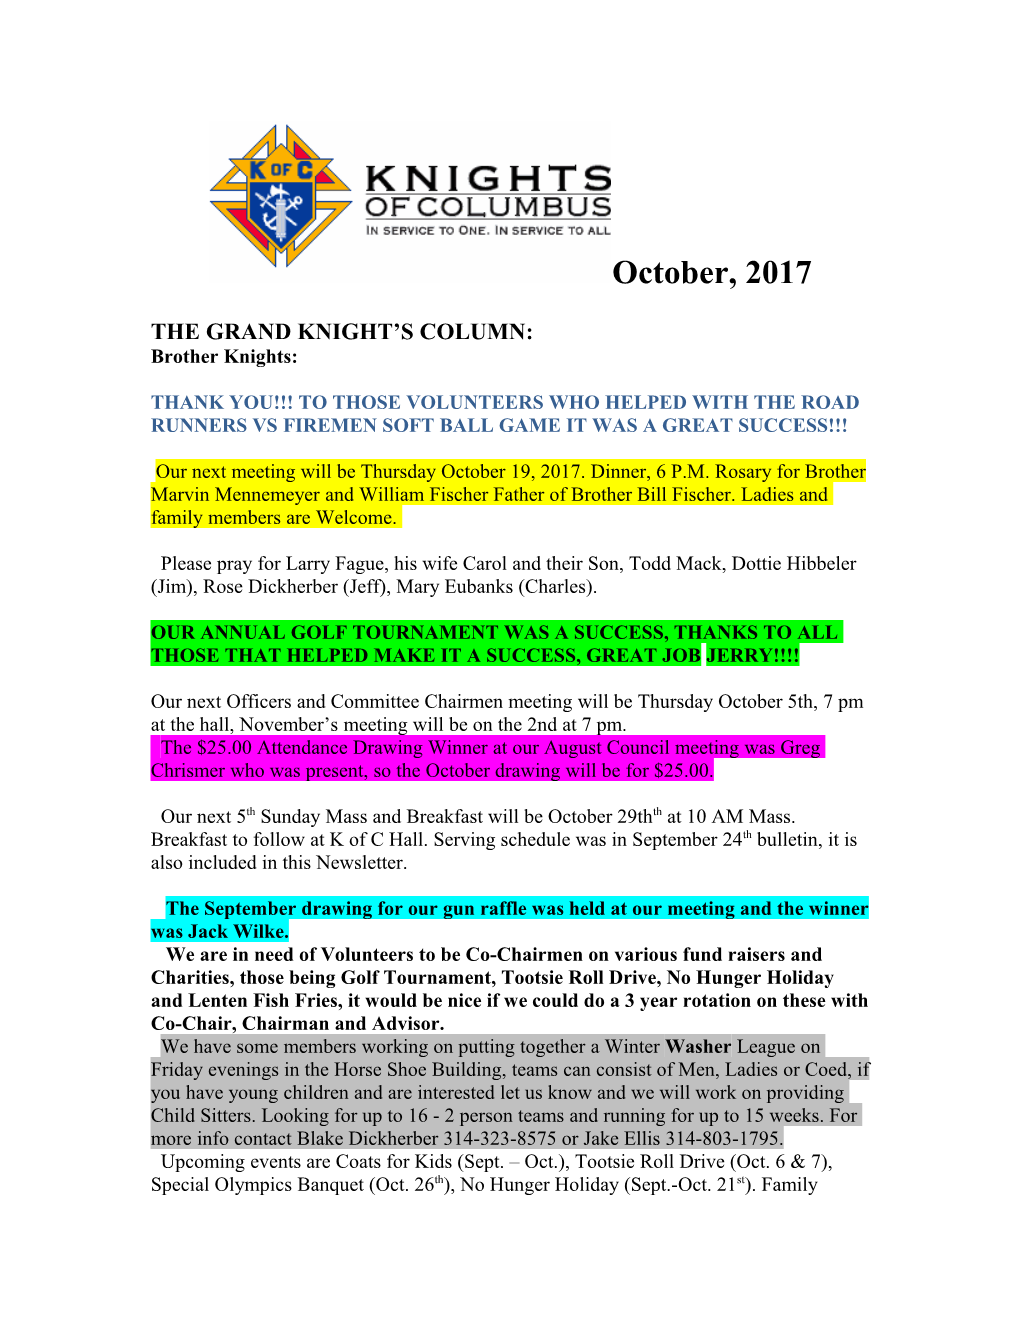 The Grand Knight S Column